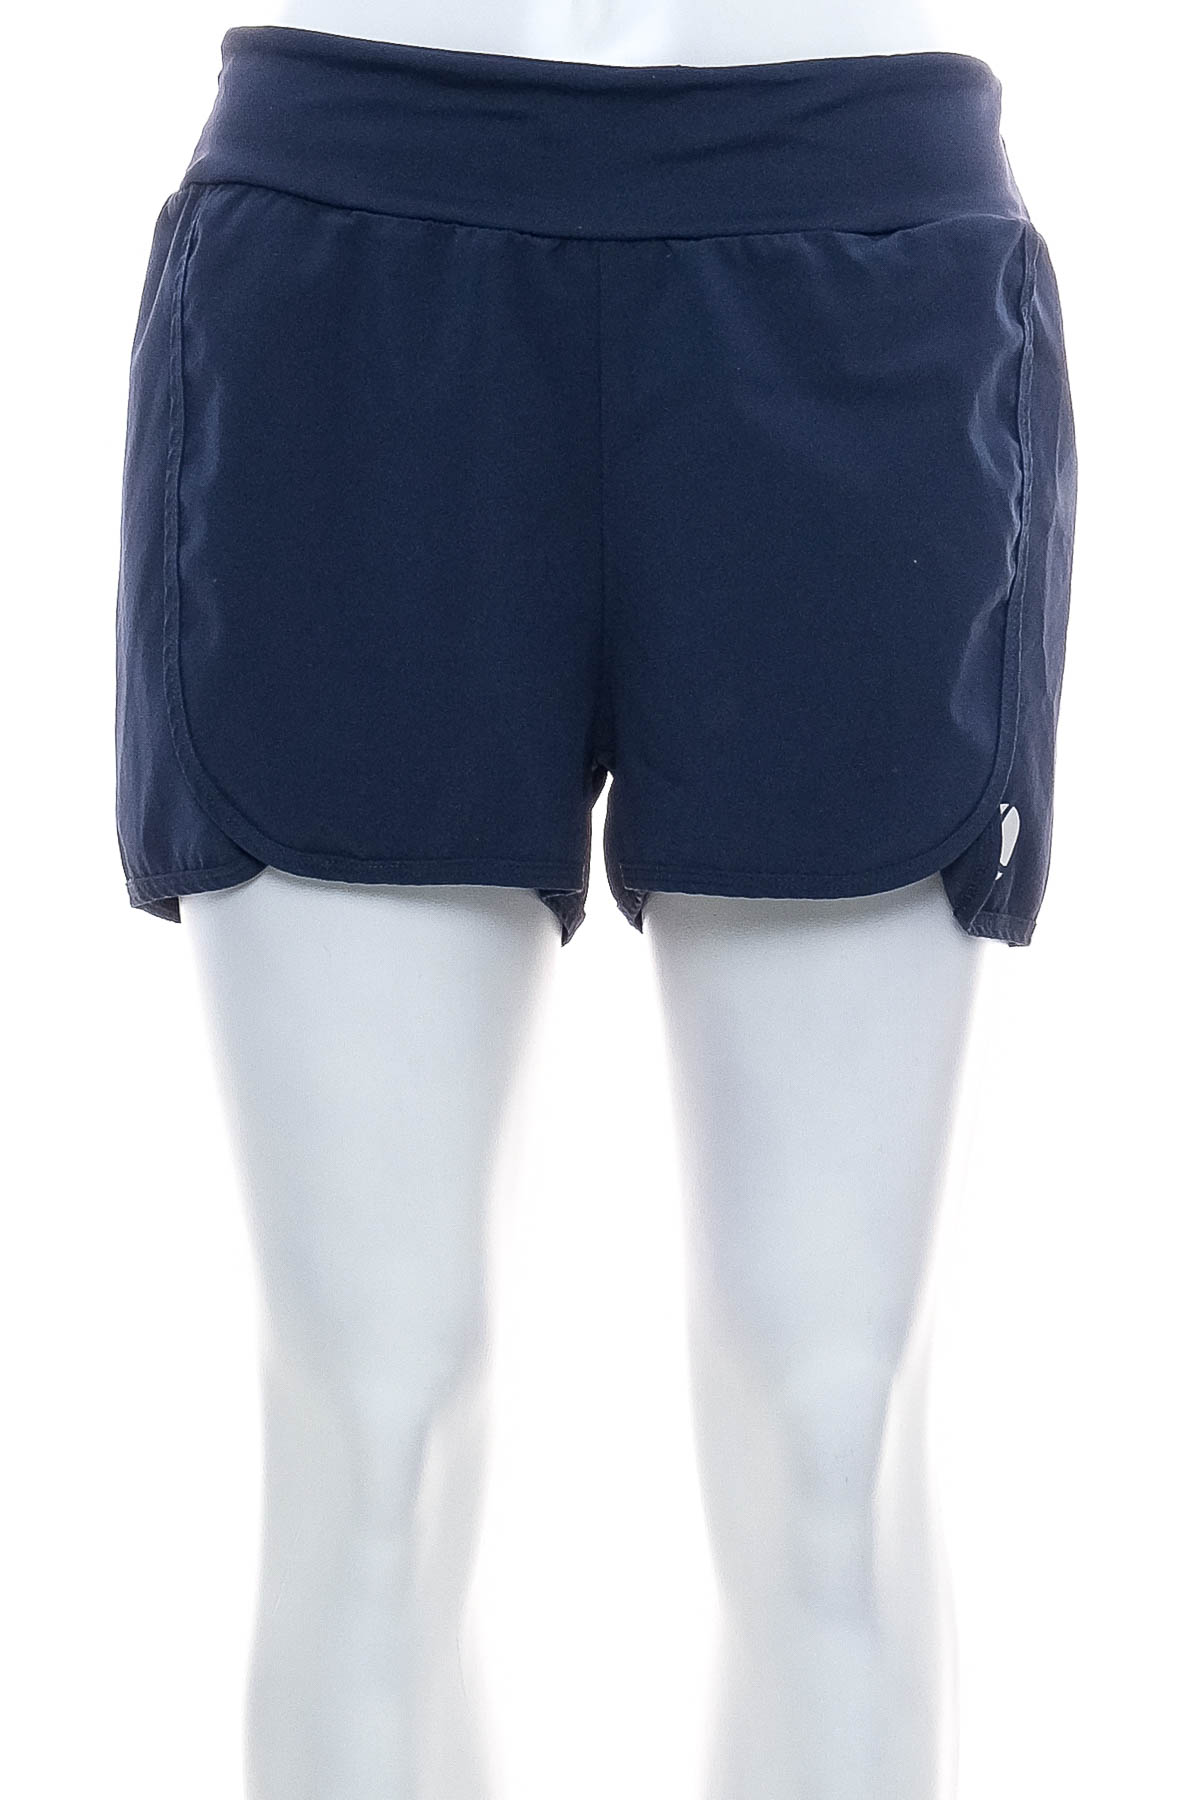 Women's shorts - BJORN BORG - 0